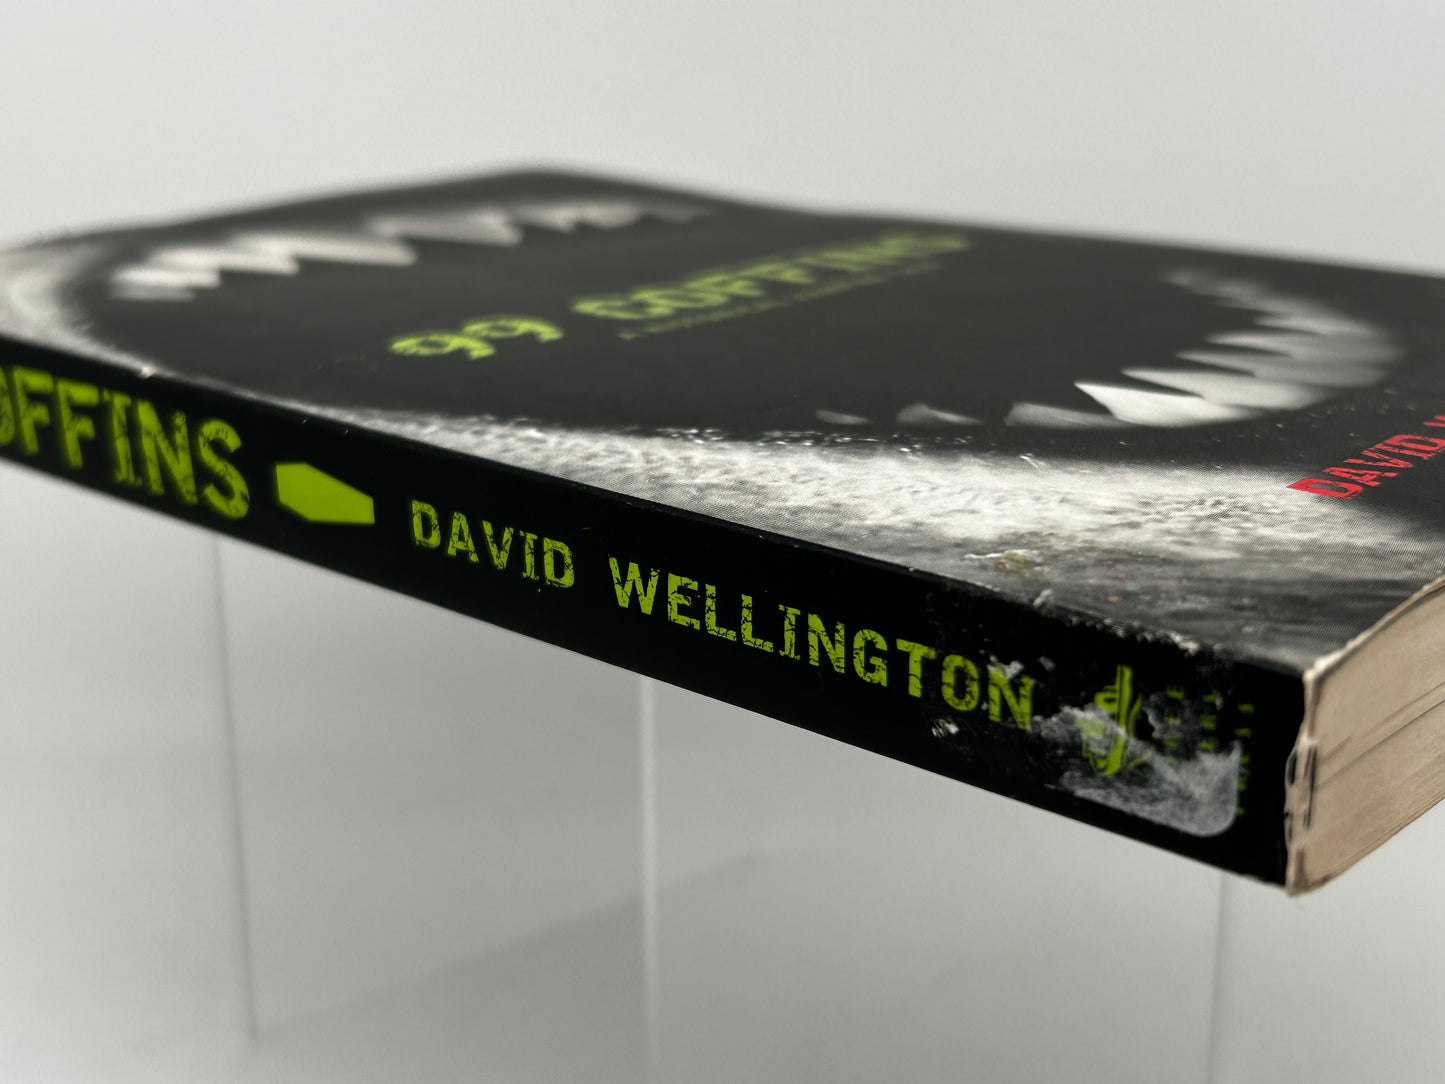 99 Coffins THREE RIVERS Paperback David Wellington SF06